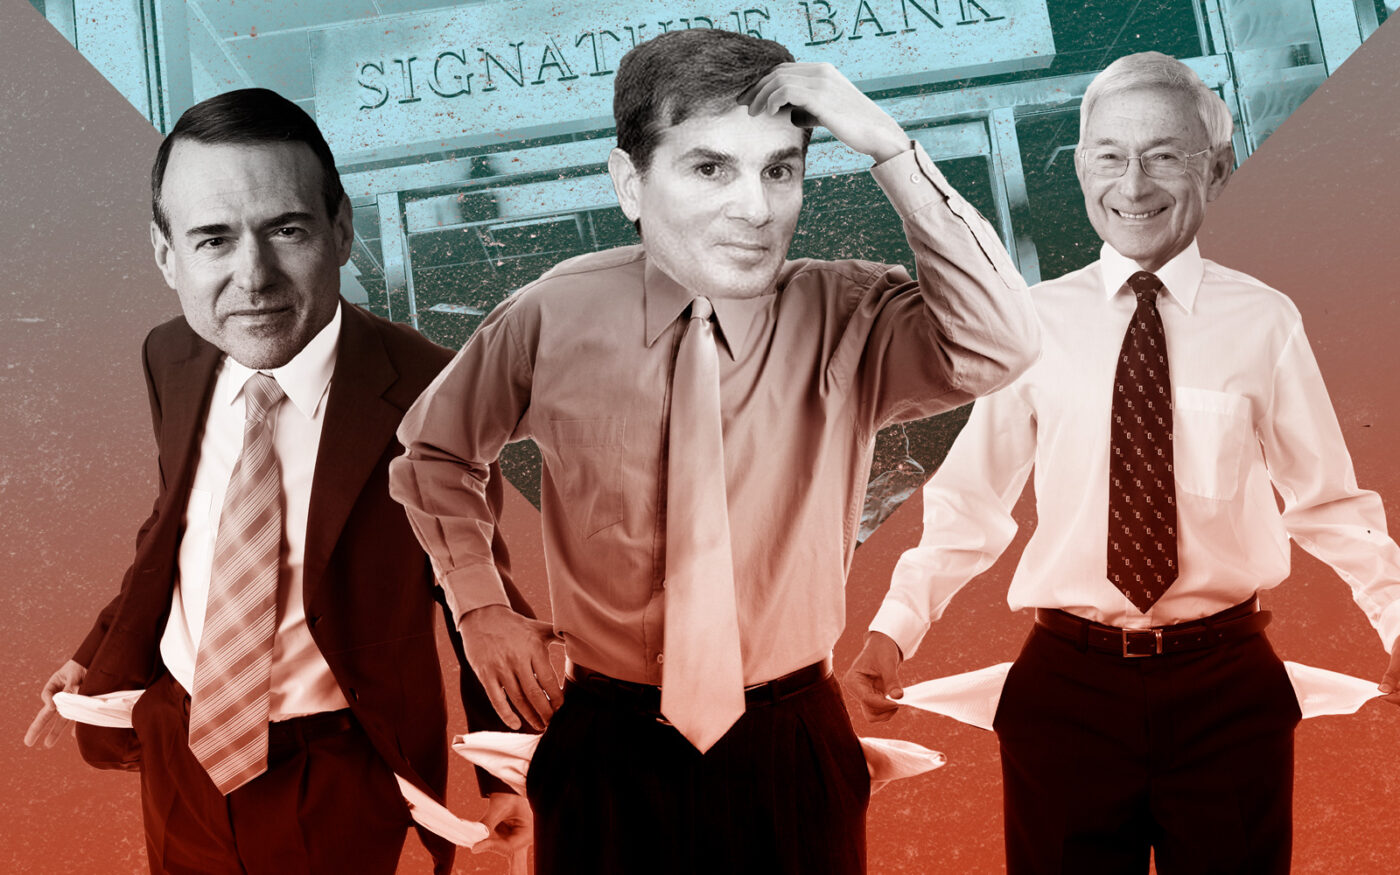 From left: Illustration of former Signature Bank executives Scott Shay, Joseph DePaolo and John Tamberlane